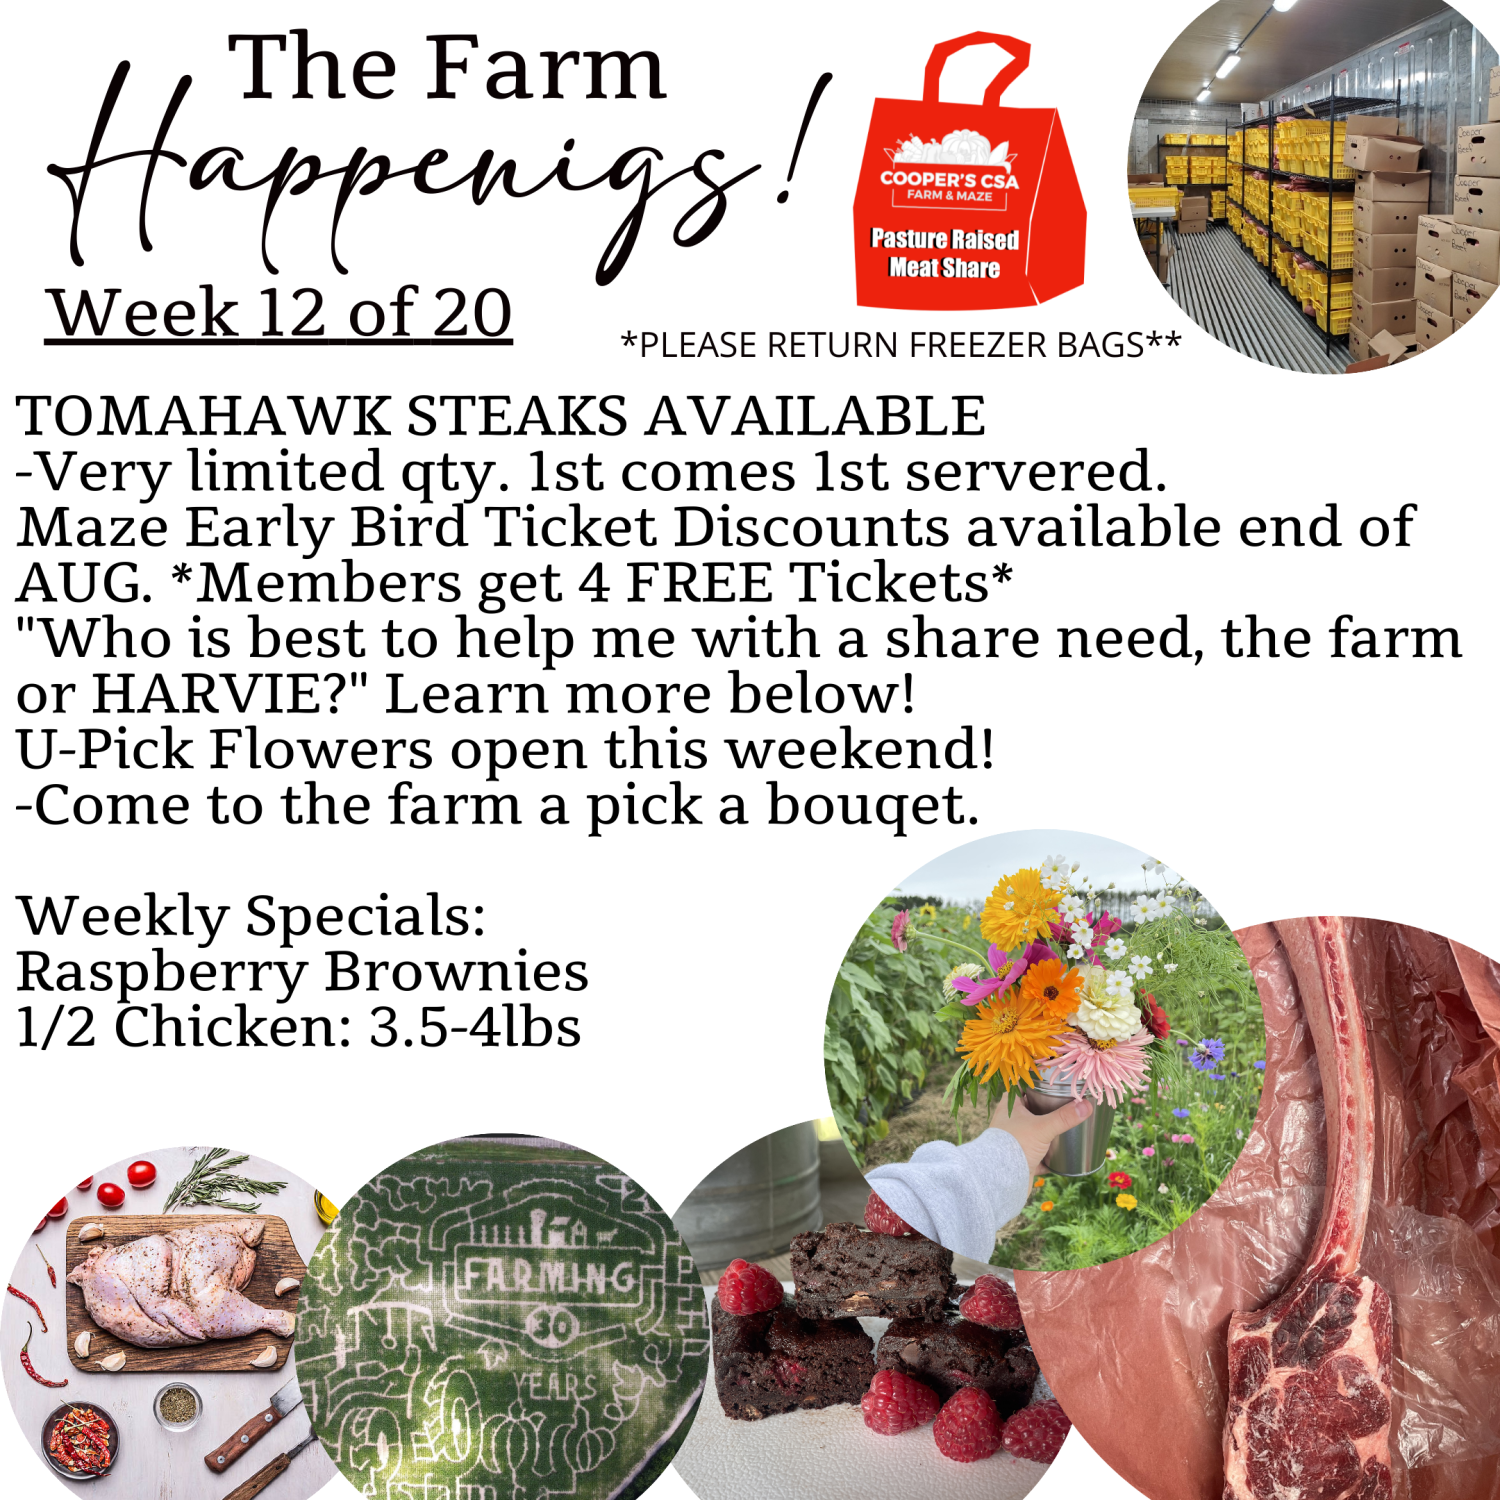 Next Happening: "Pasture Meat Shares"-Coopers CSA Farm Farm Happenings Week 12